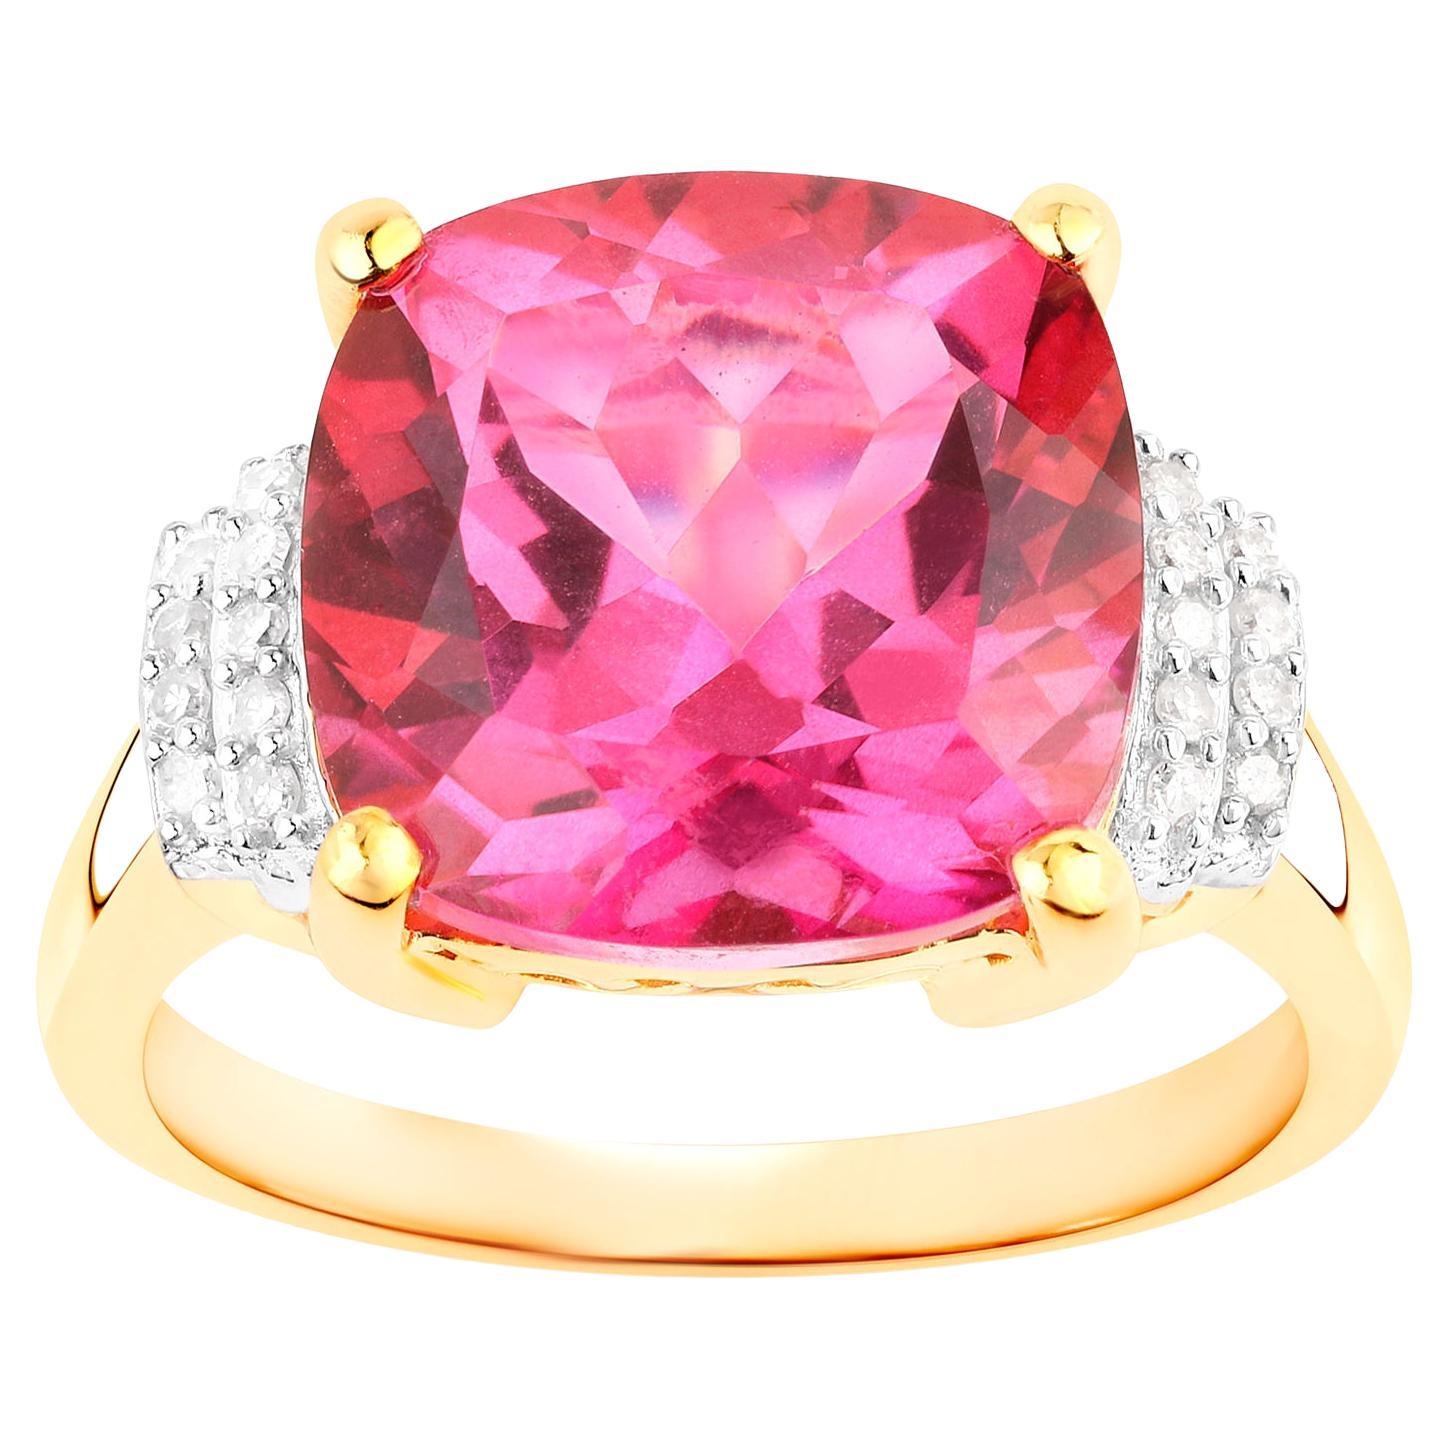 Hot Pink Topaz Ring Diamond Setting 9.25 Carats 18K Yellow Gold Plated